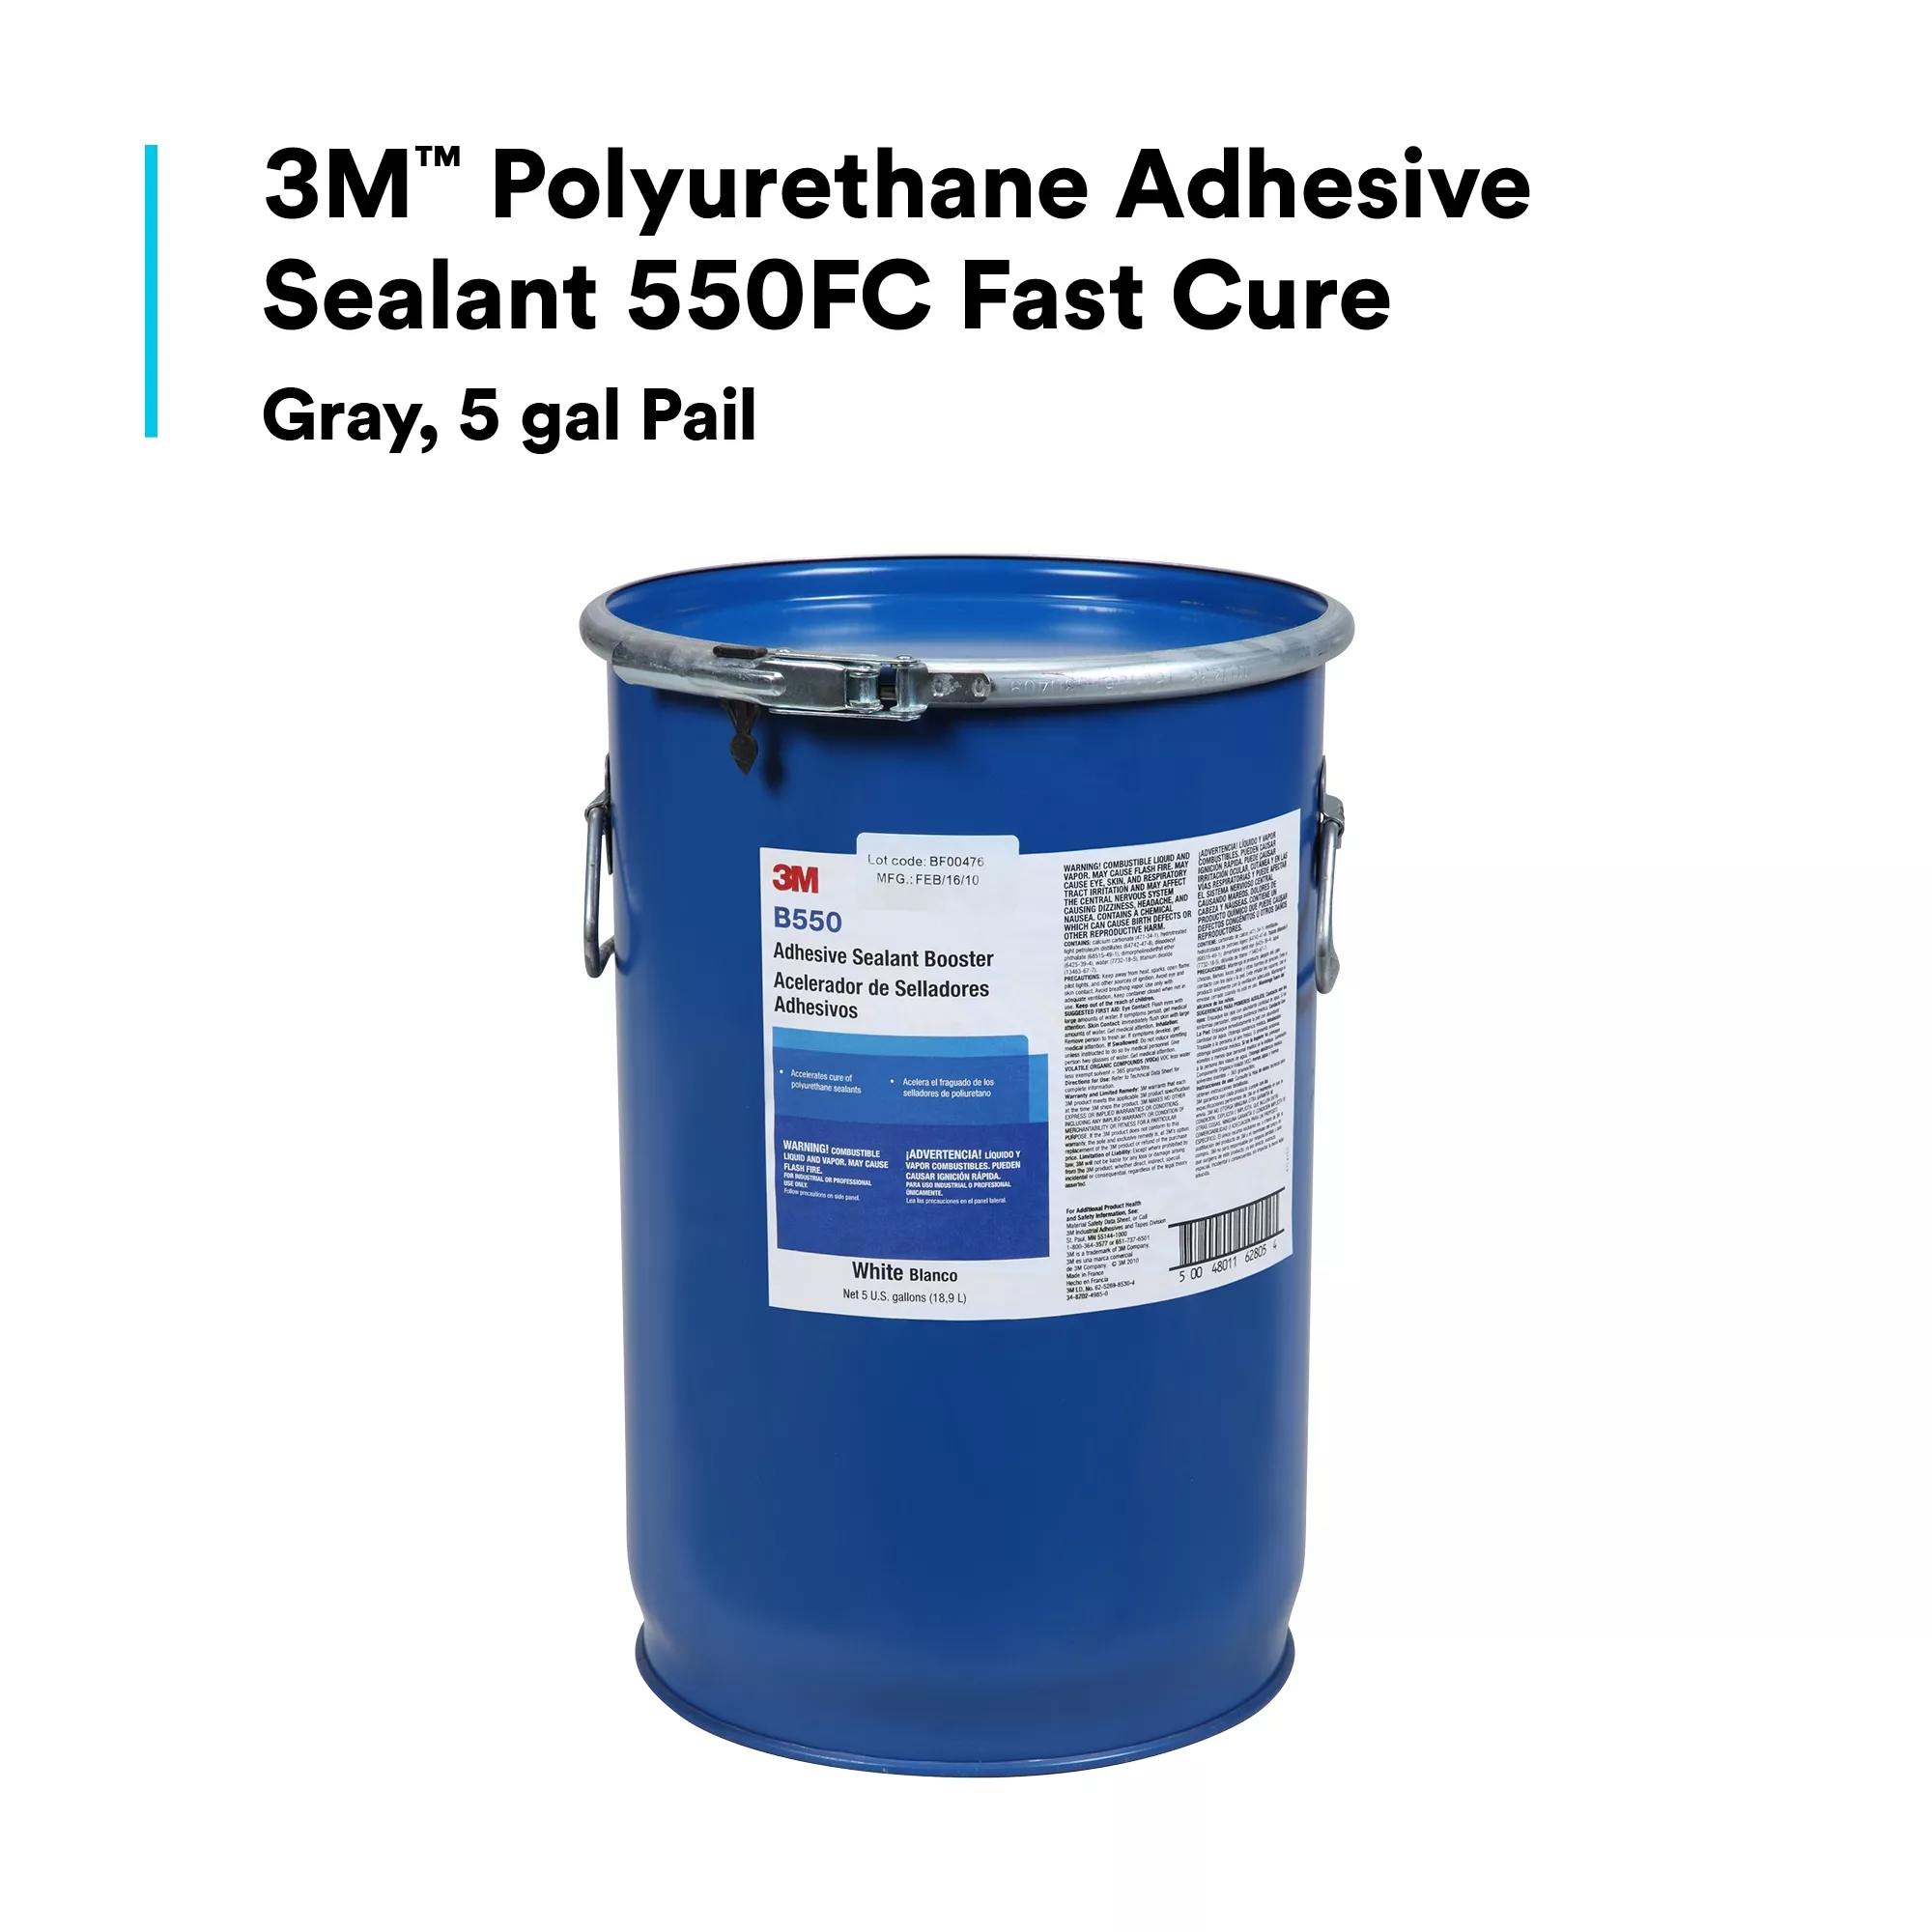 3M™ Polyurethane Adhesive Sealant 550FC, Fast Cure, Gray, 5 Gallon
(Pail), Drum